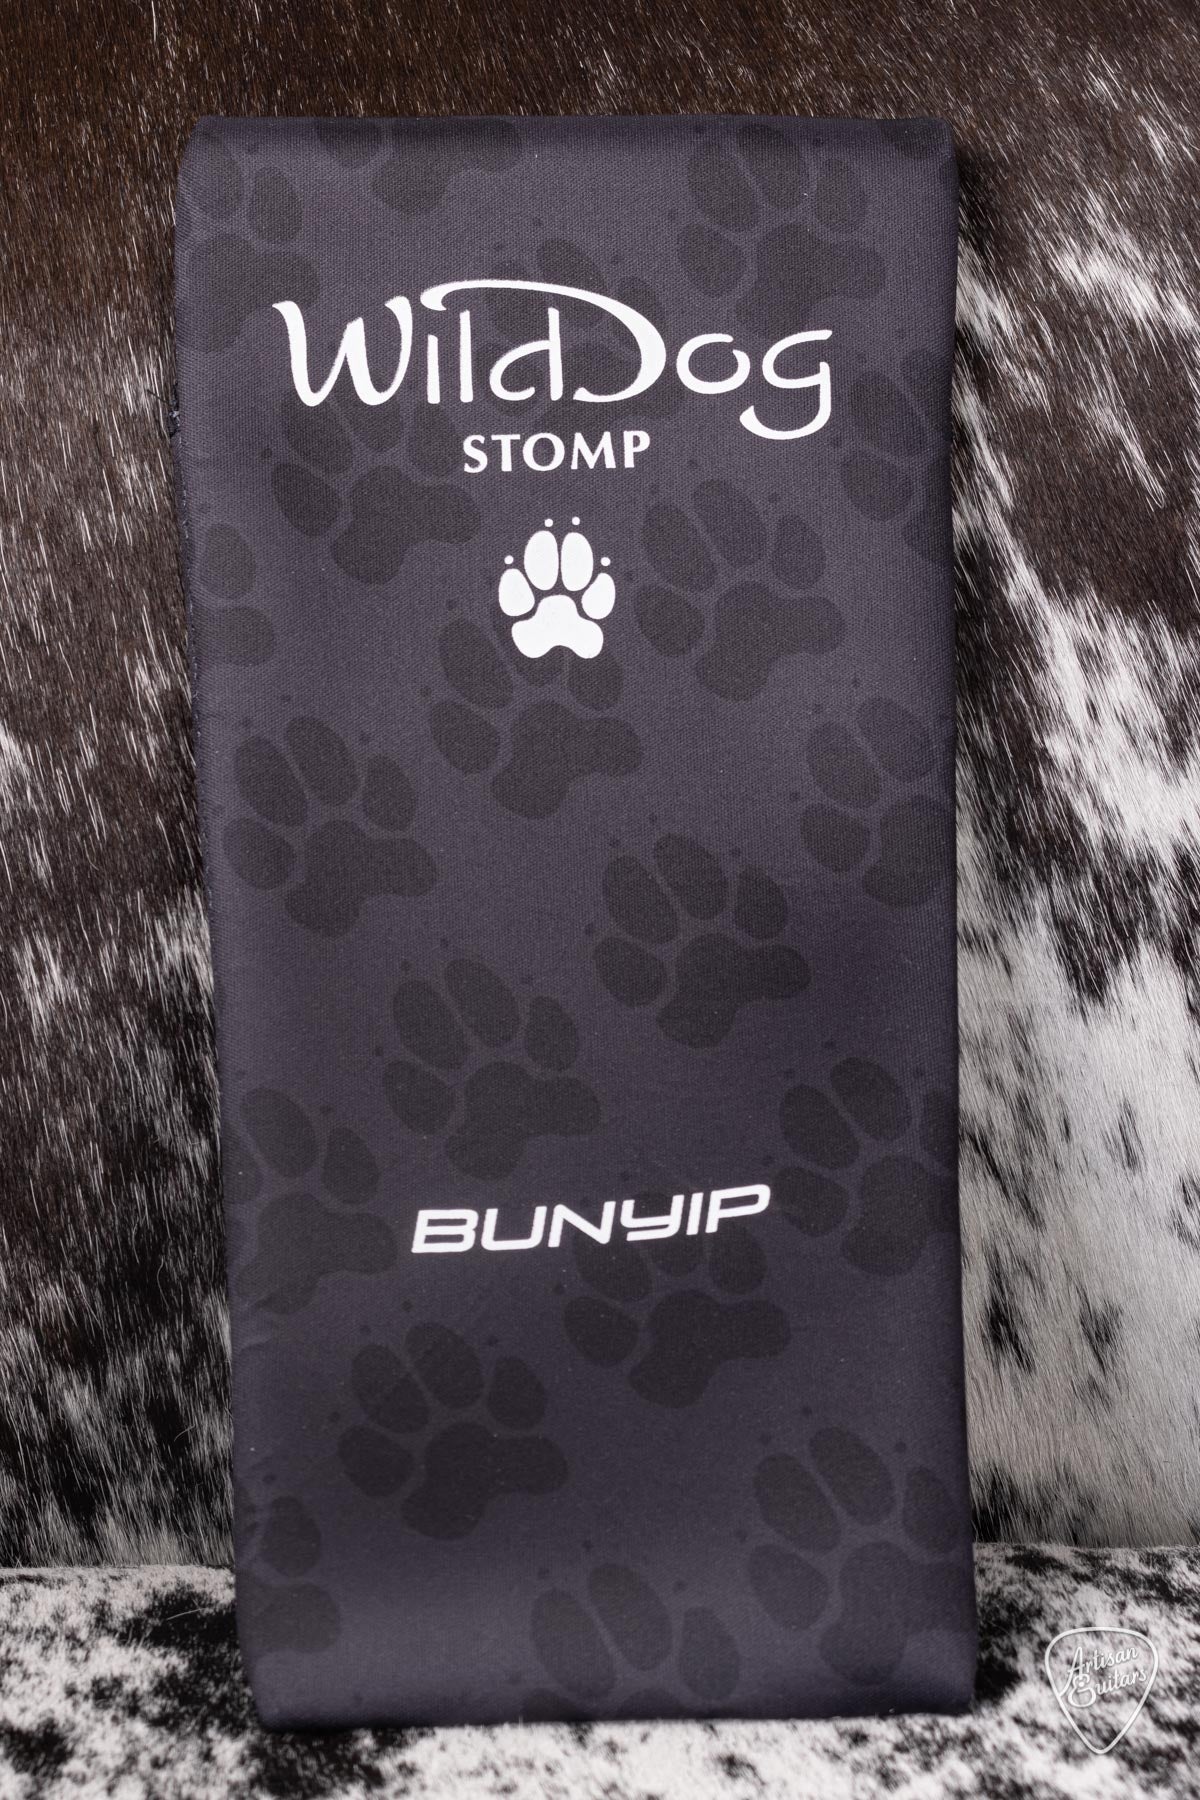 Wild Dog Bunyip Stomp Box - 16472